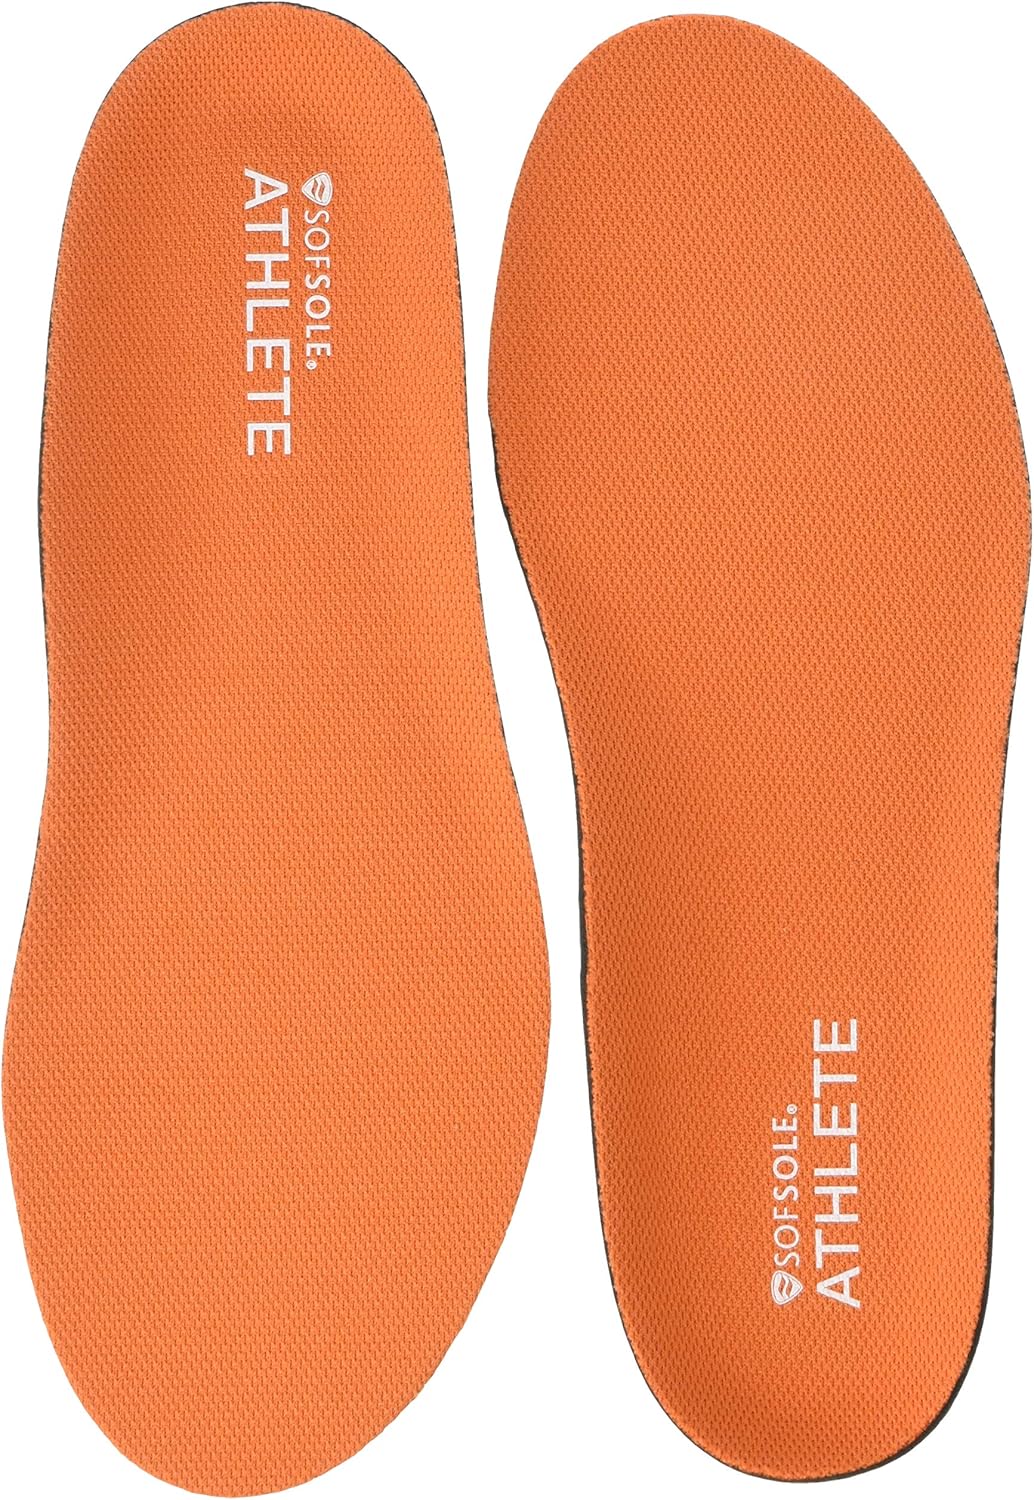 Sof Sole Insoles Women's ATHLETE Performance Full-Length Gel Shoe Insert